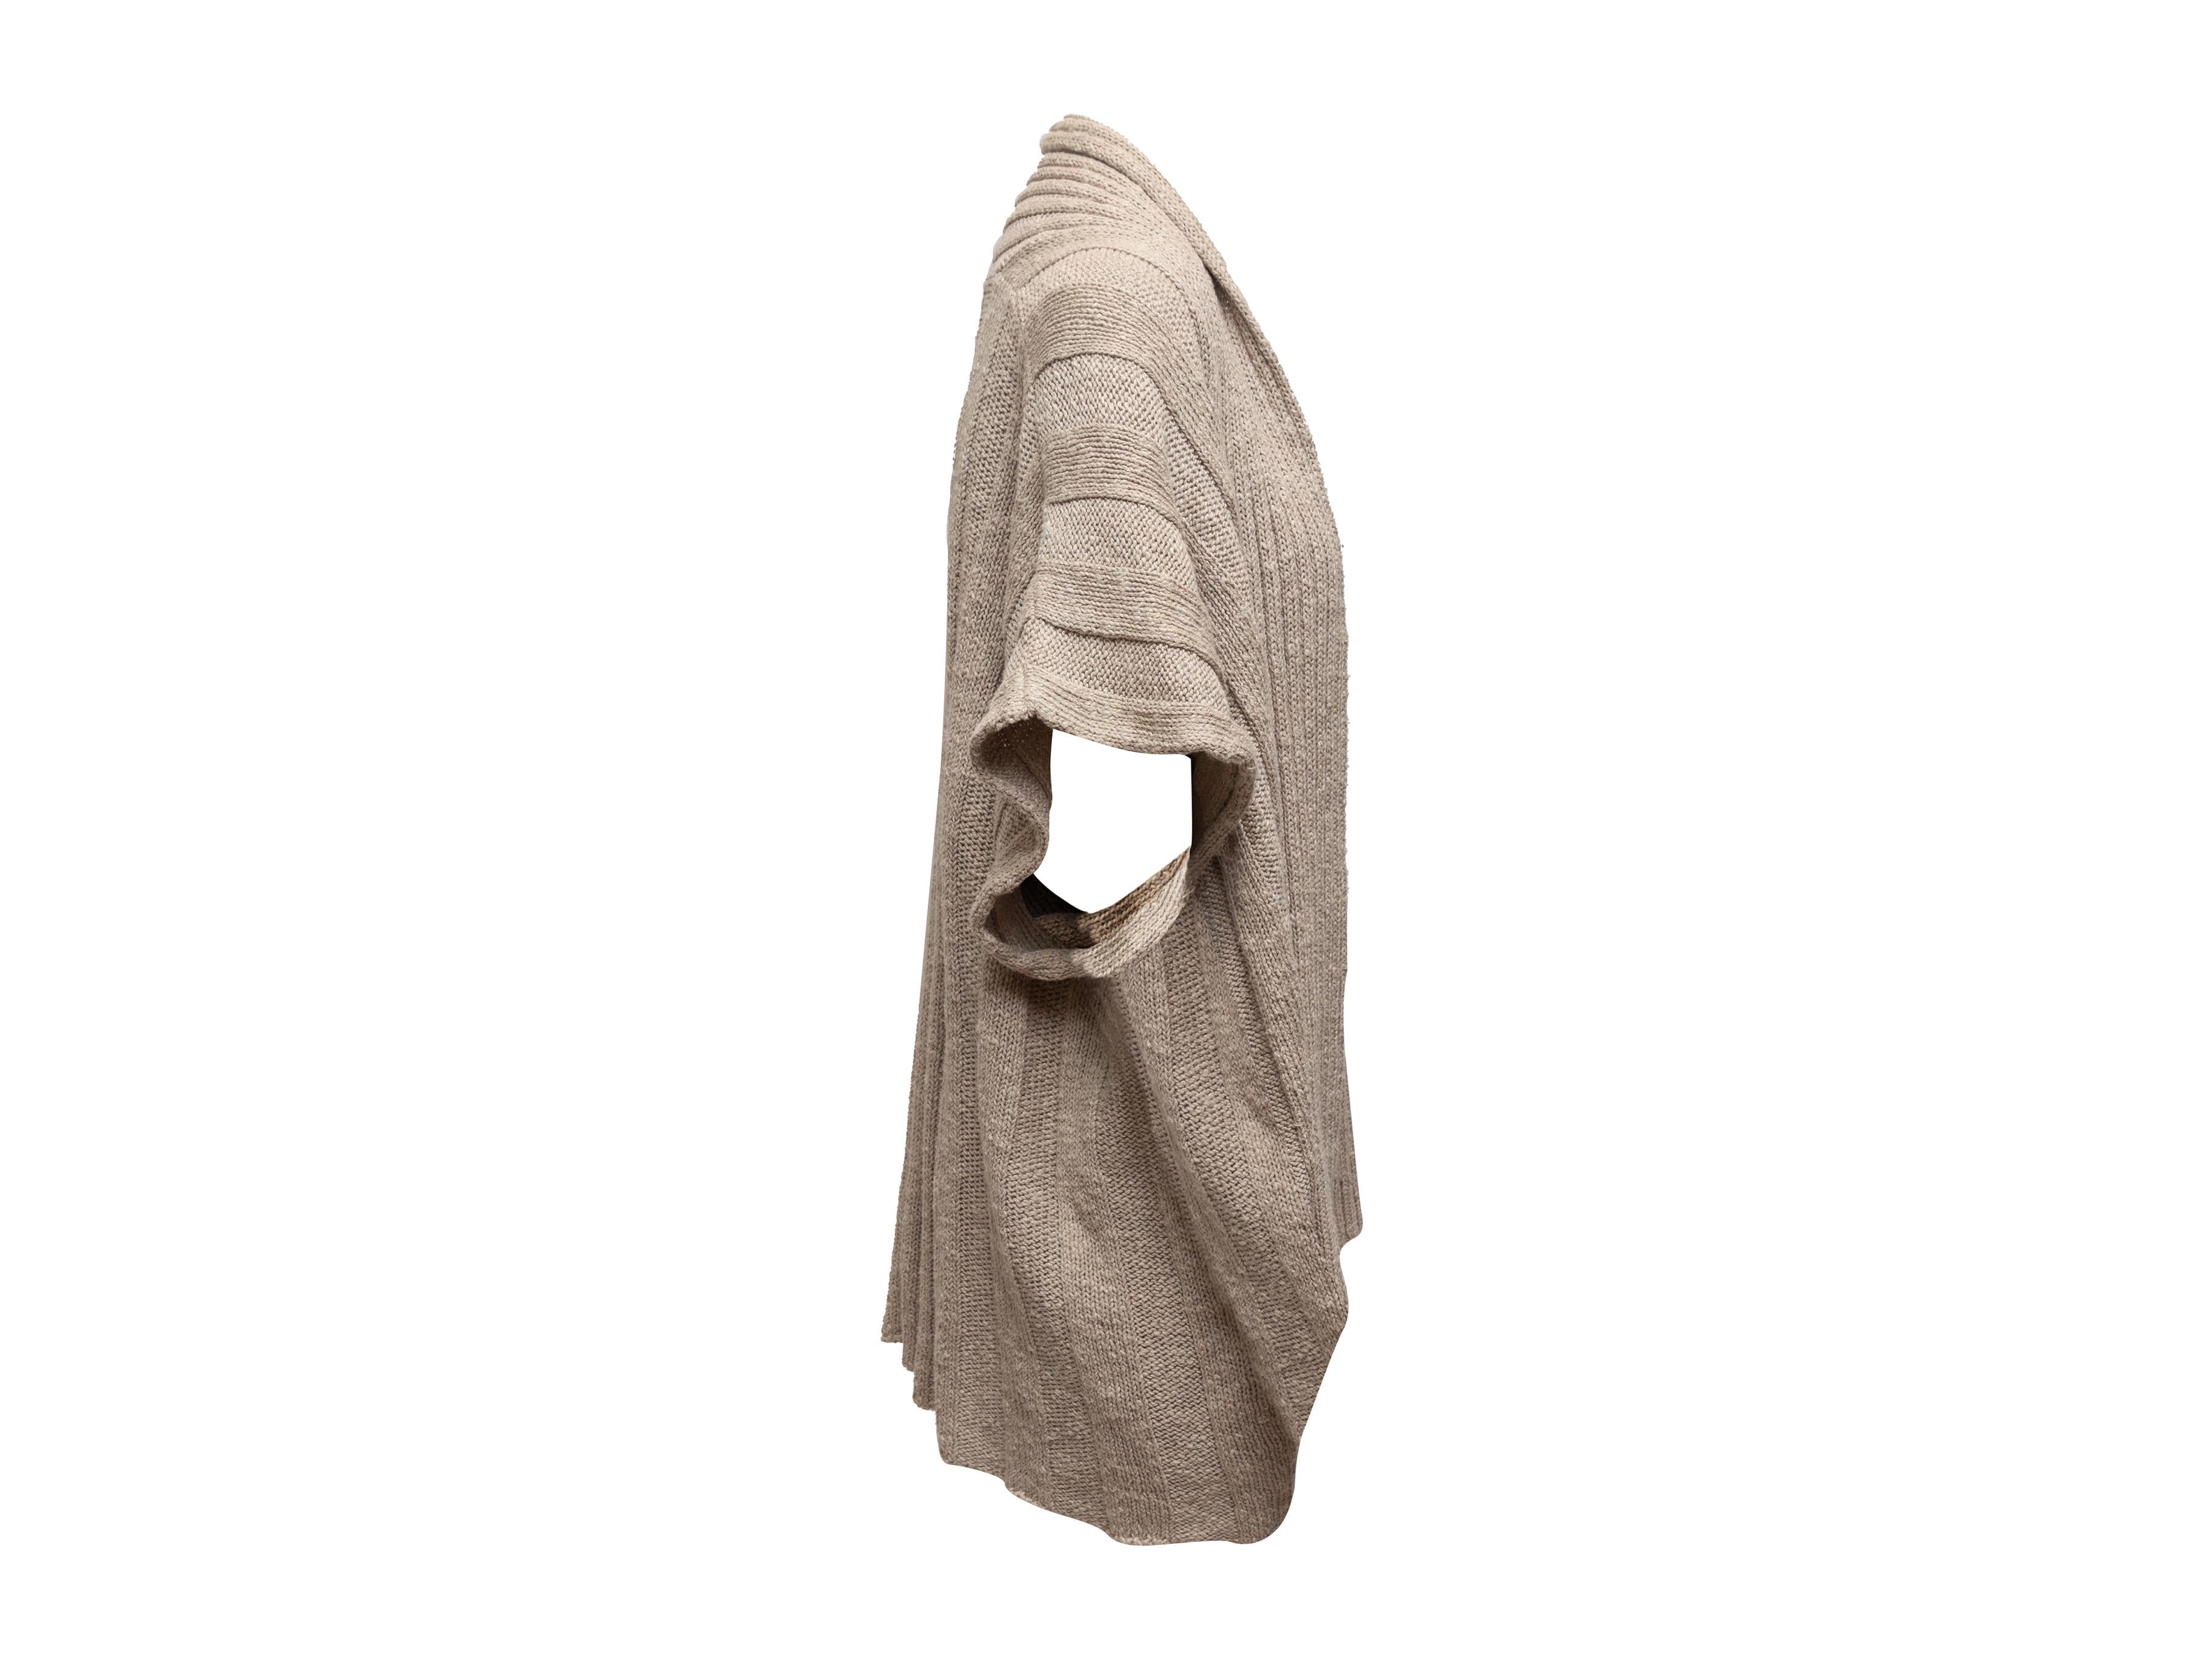 Product details: Grey linen-blend cardigan by Eskandar. Short dolman sleeves. Open front. 34